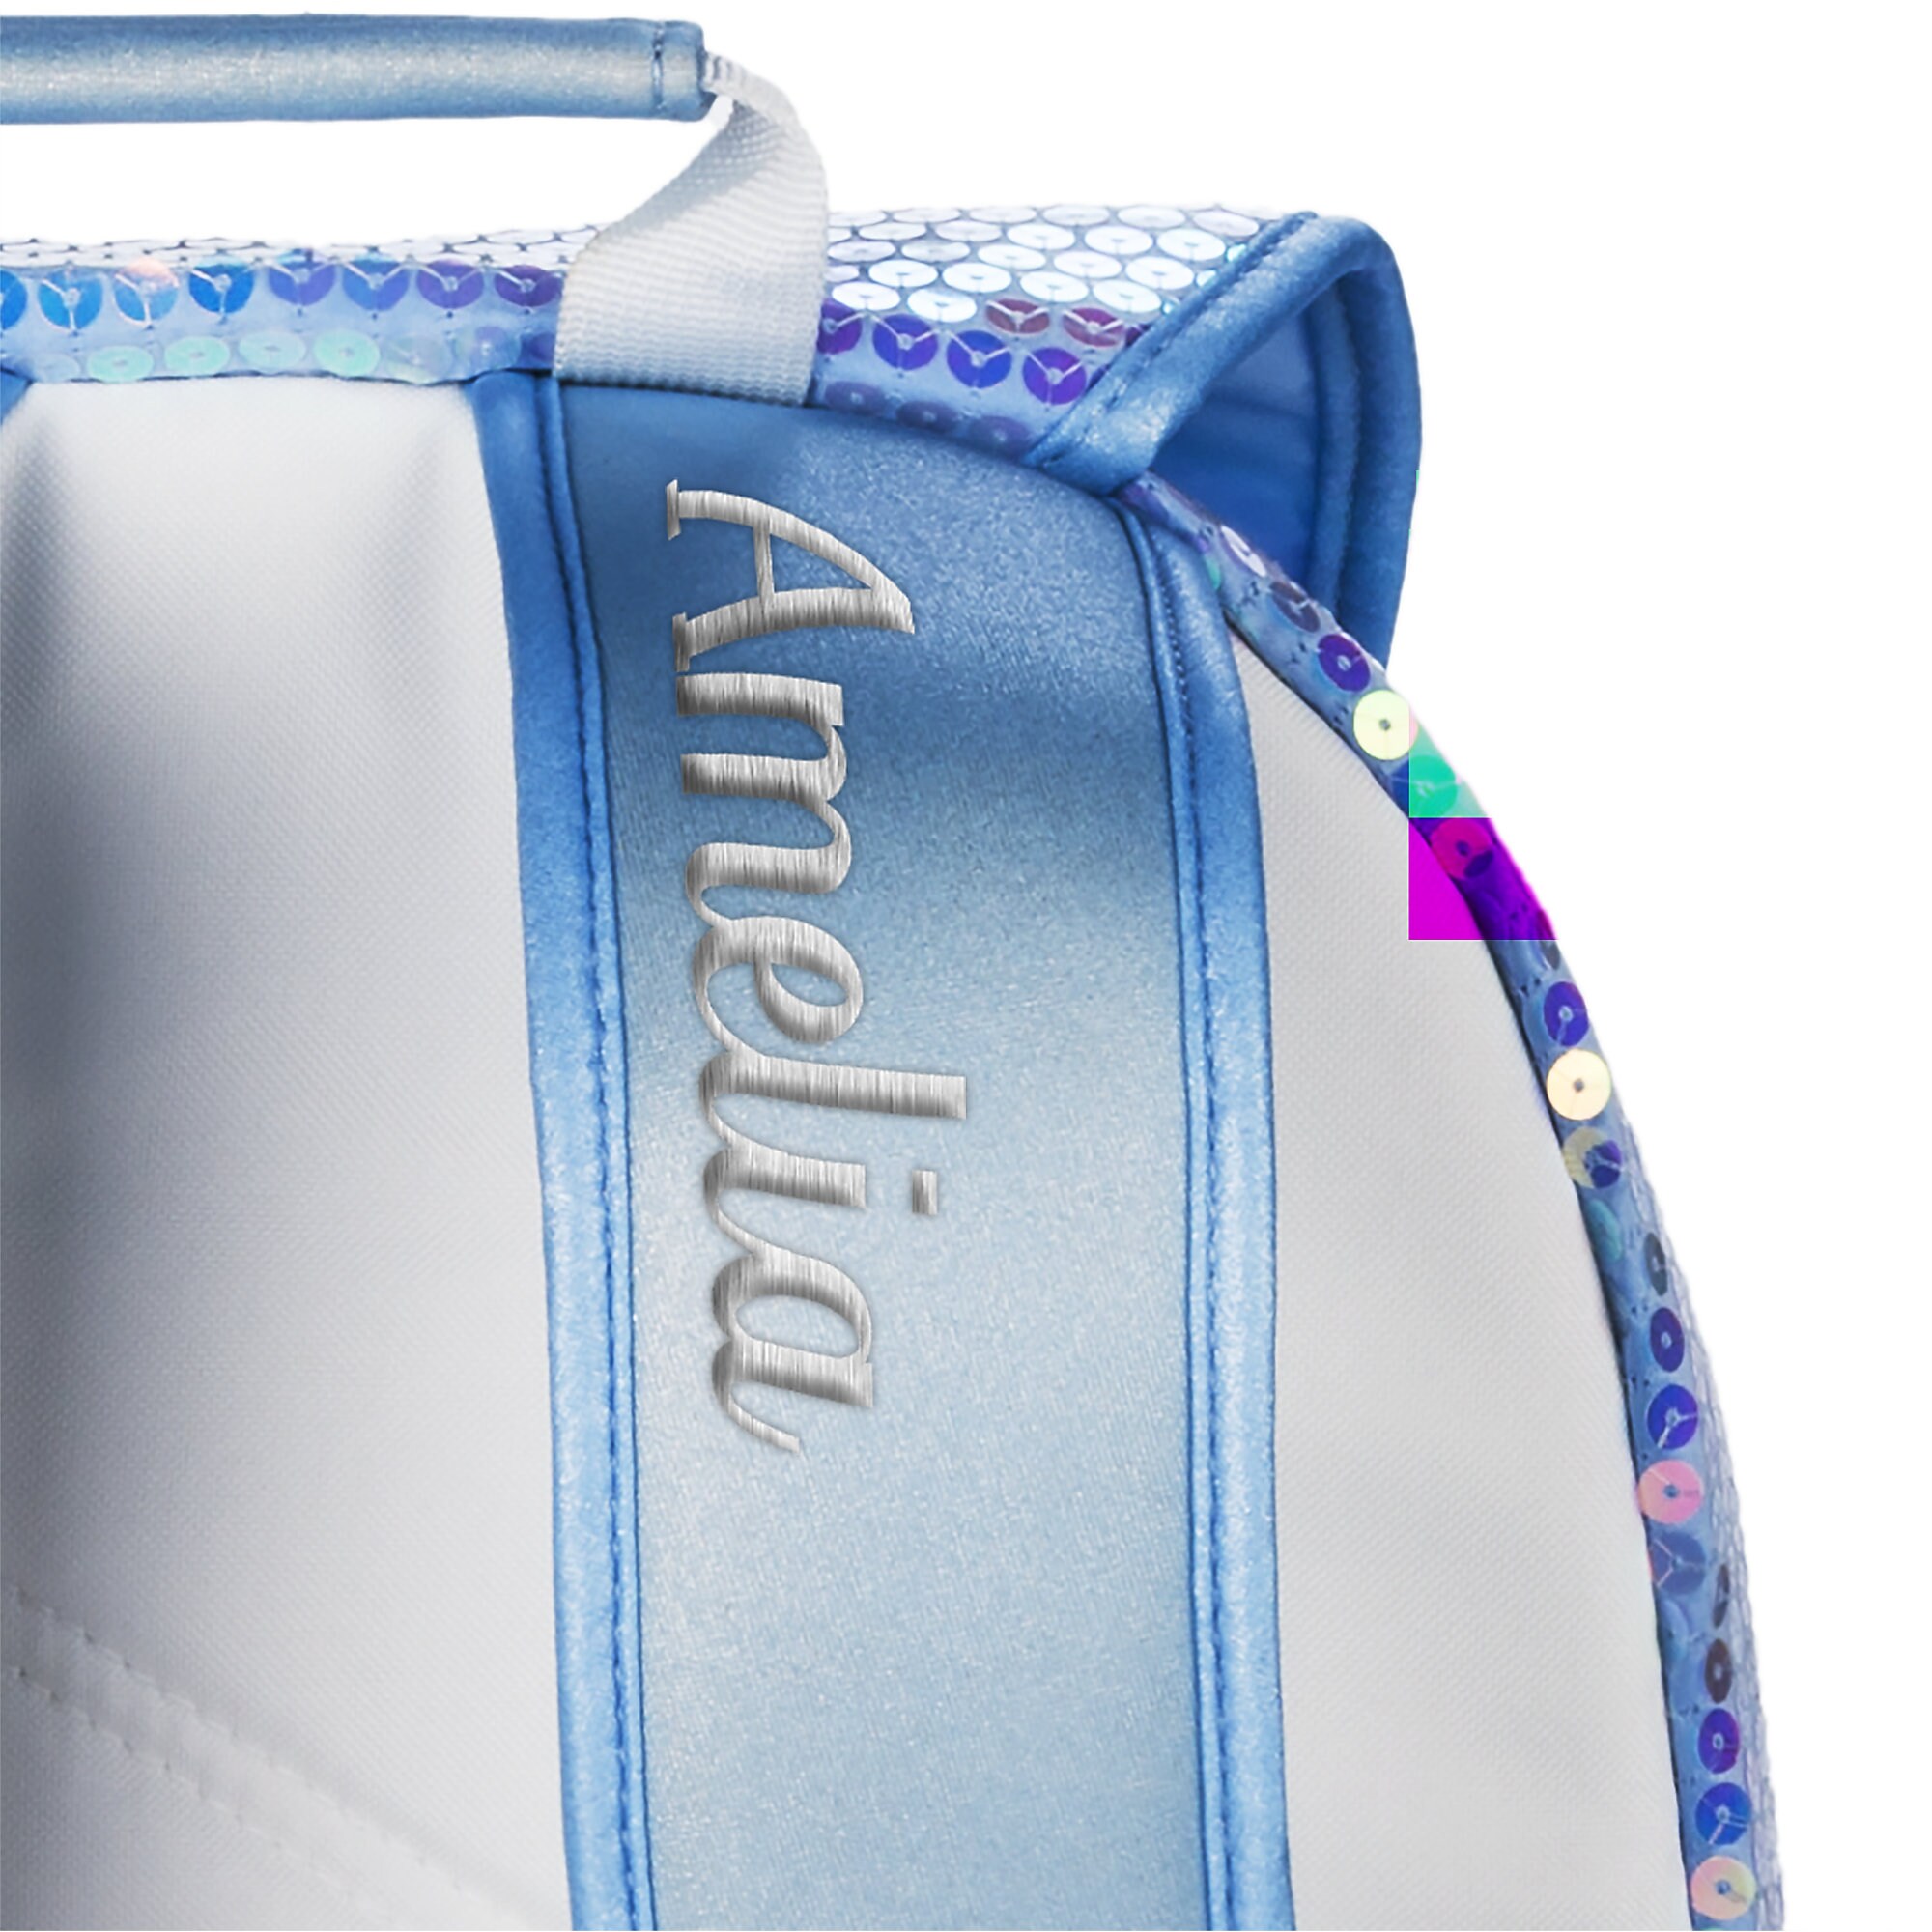 Elsa Backpack for Kids - Frozen - Personalized